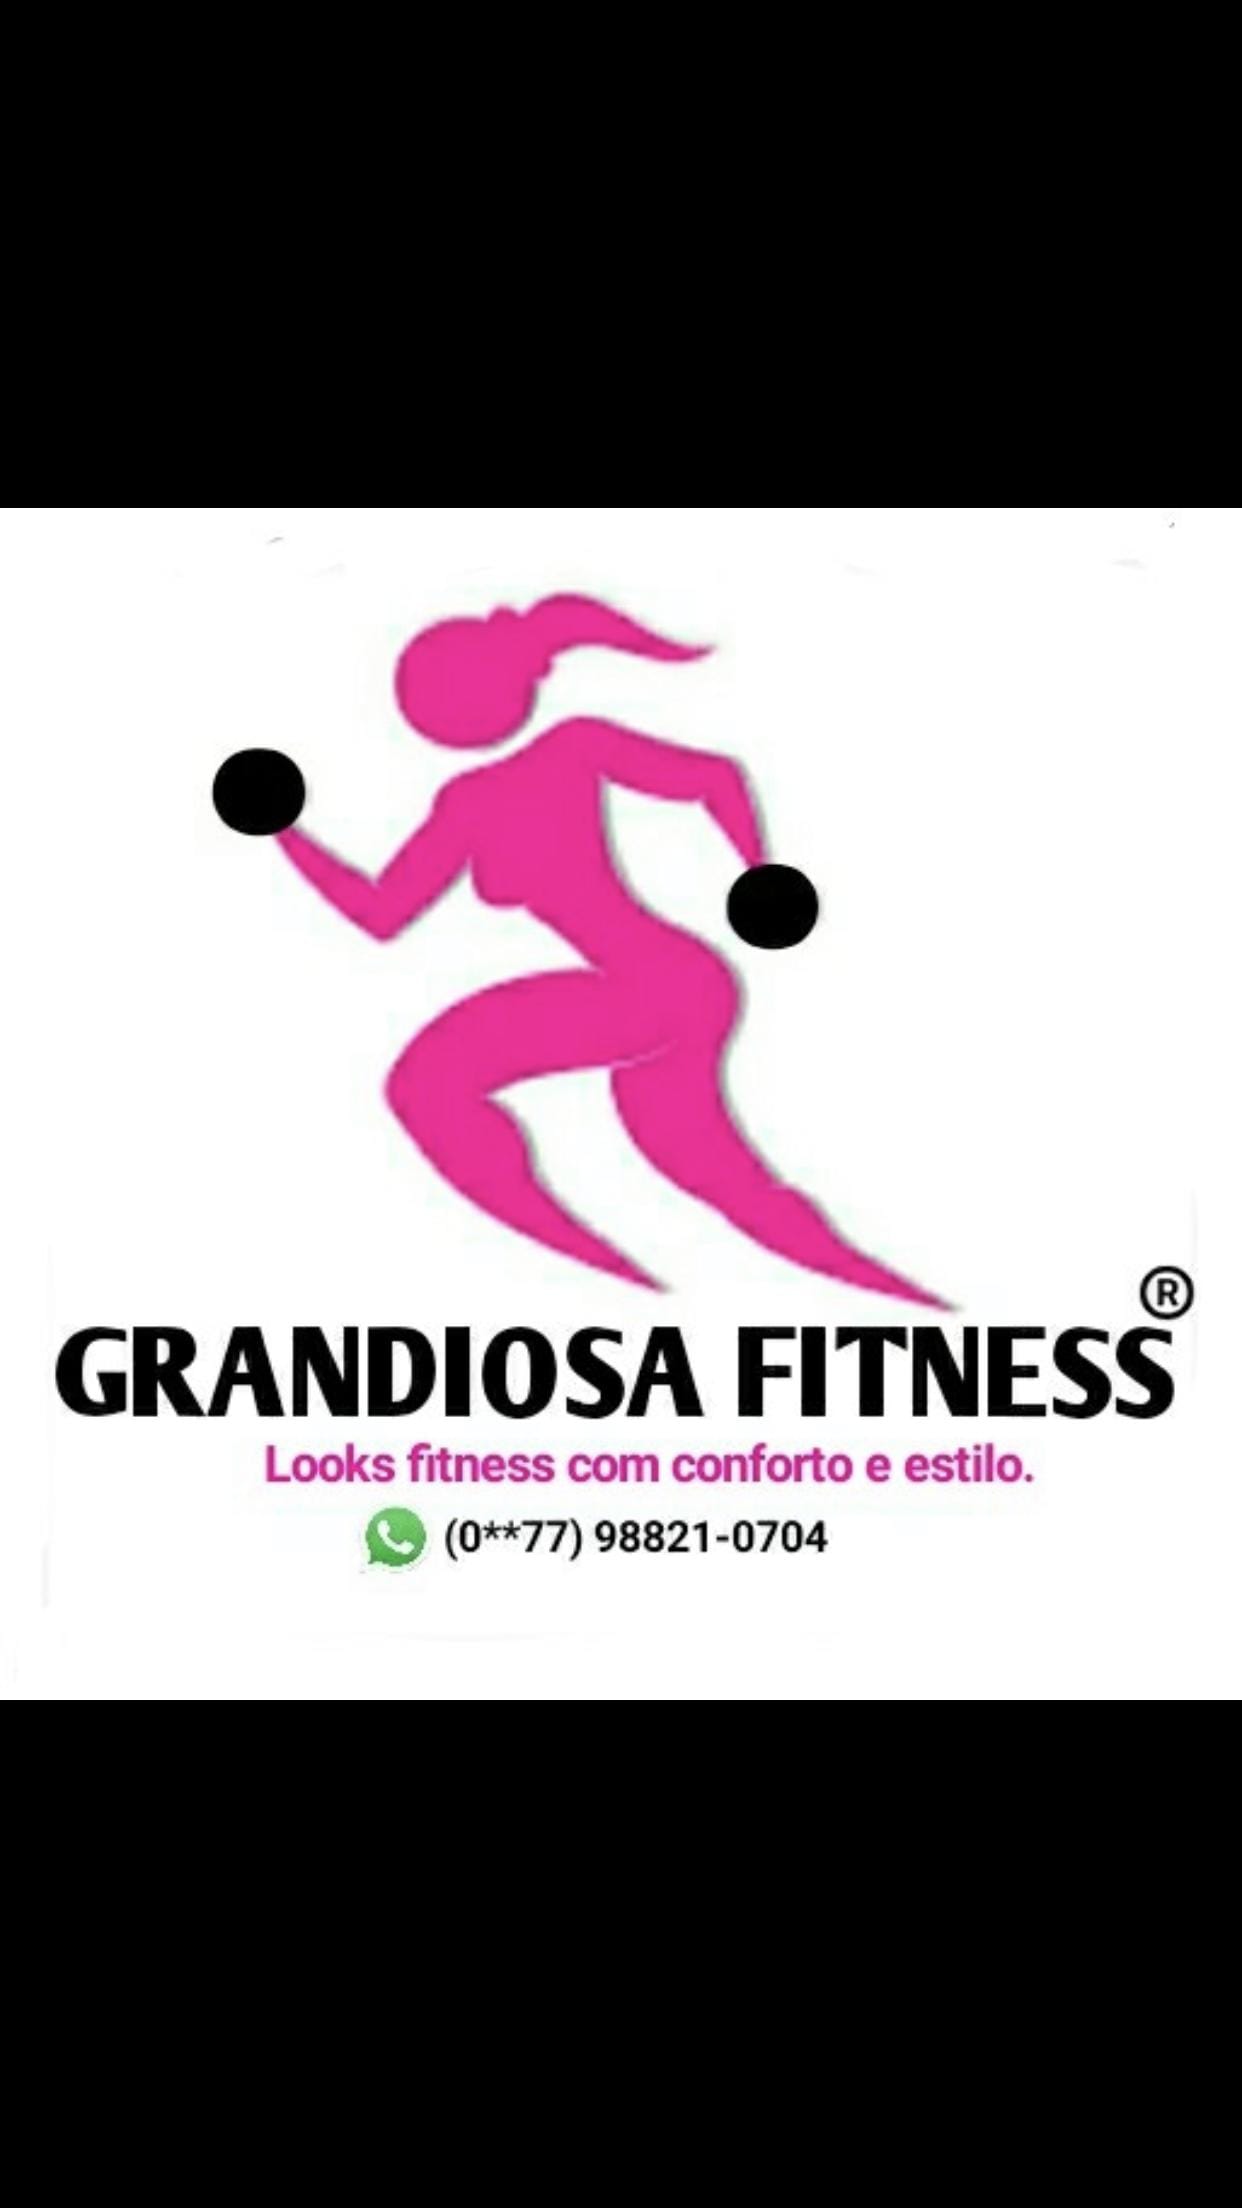 Grandiosa Fitness